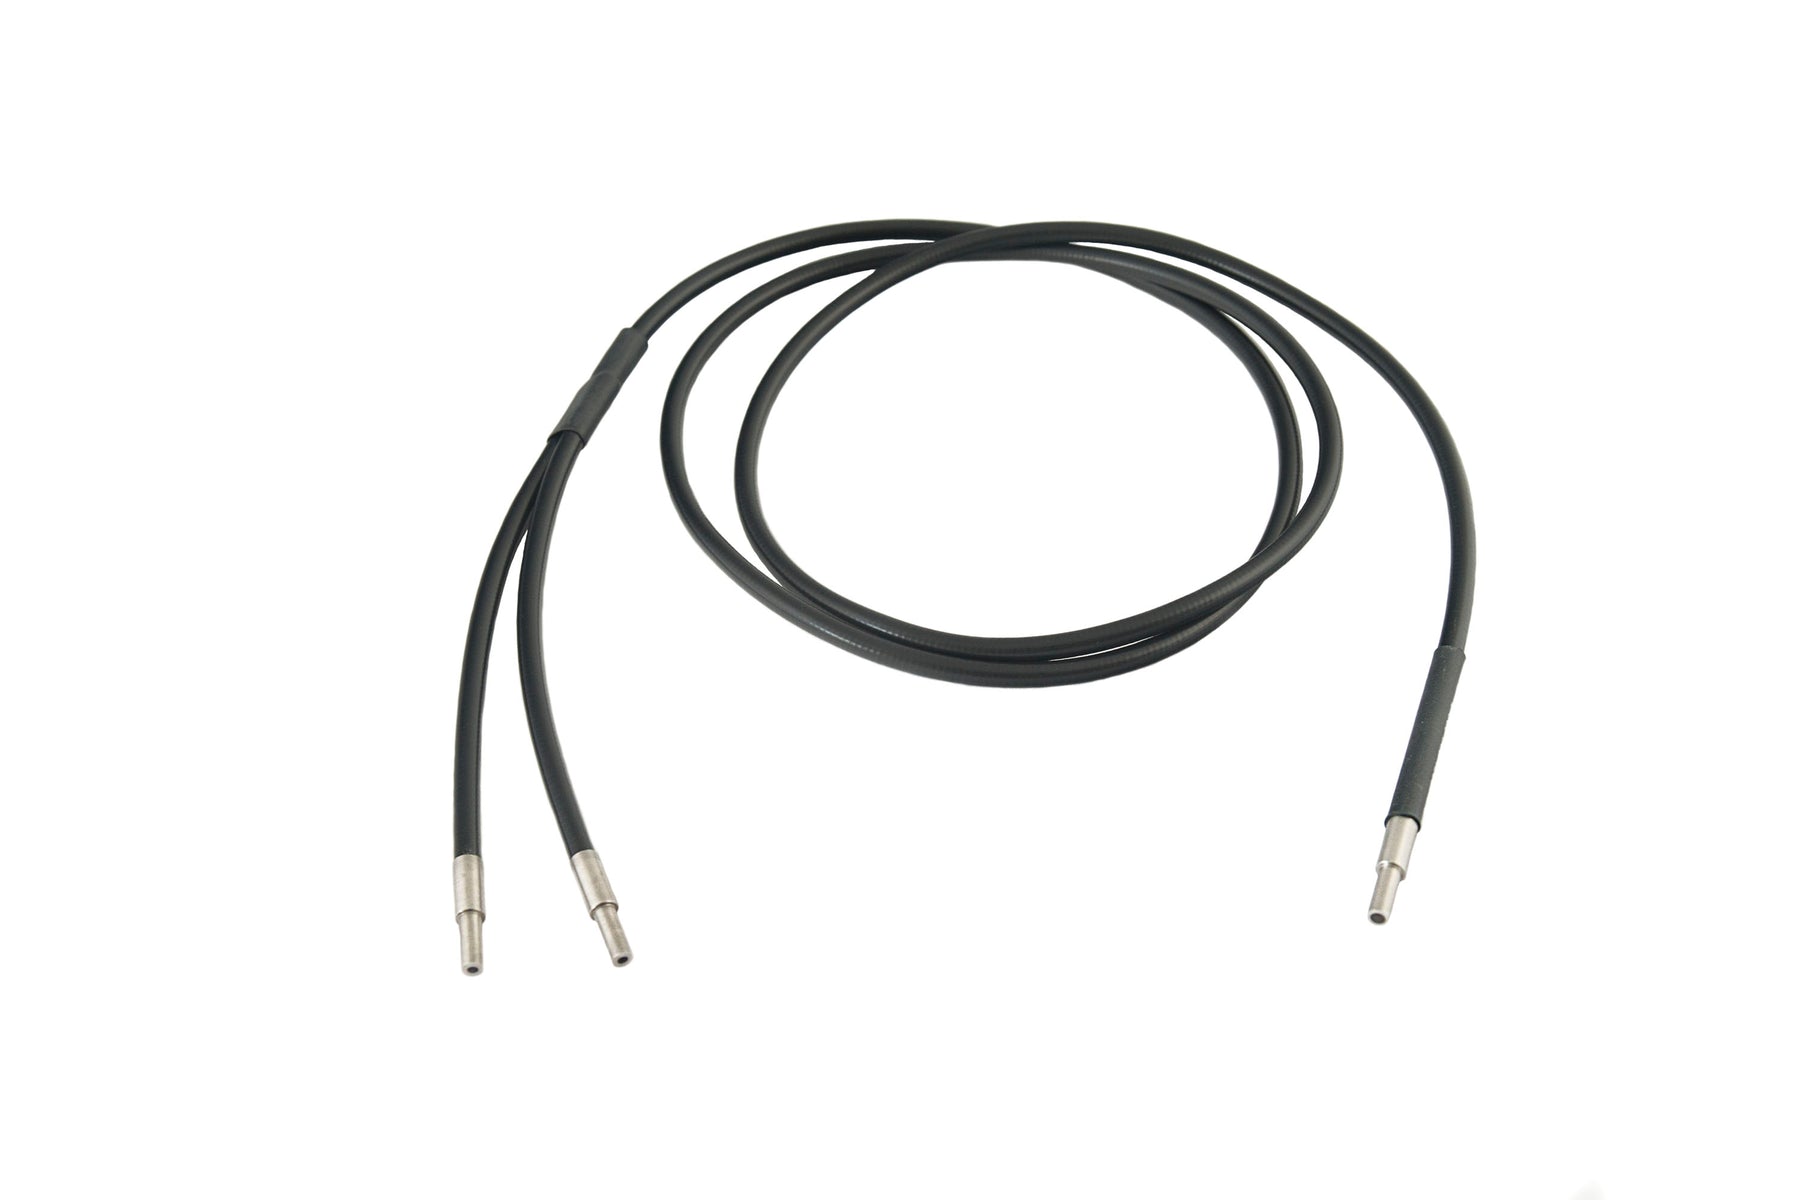 E4 & EX4 type, Dual Fiber Optic Cable, 1/4" (6.3mm) Randomized Fiber Bundle